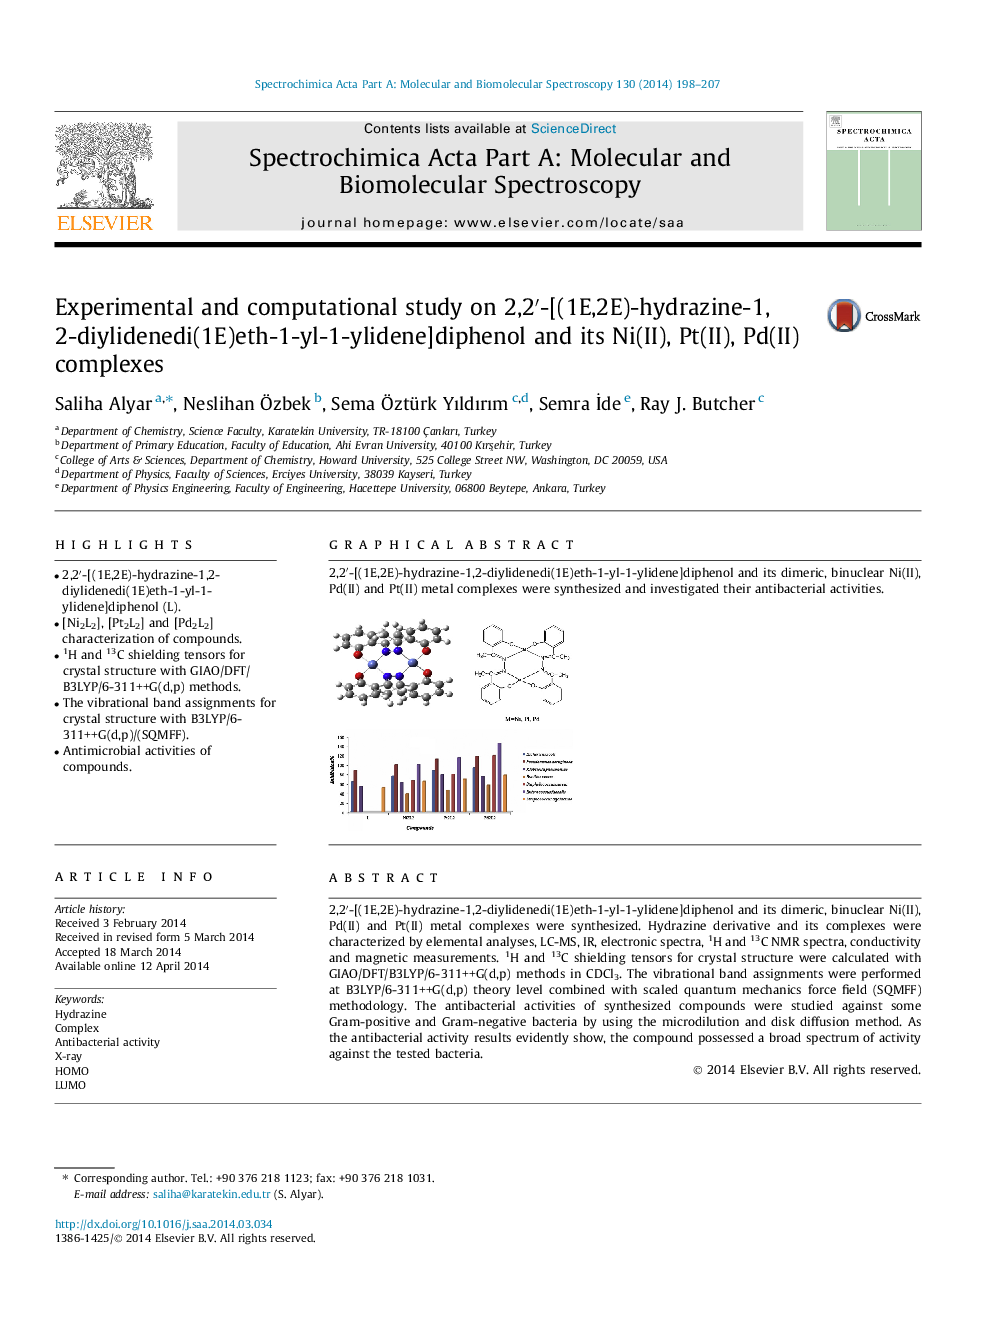 Experimental and computational study on 2,2′-[(1E,2E)-hydrazine-1,2-diylidenedi(1E)eth-1-yl-1-ylidene]diphenol and its Ni(II), Pt(II), Pd(II) complexes